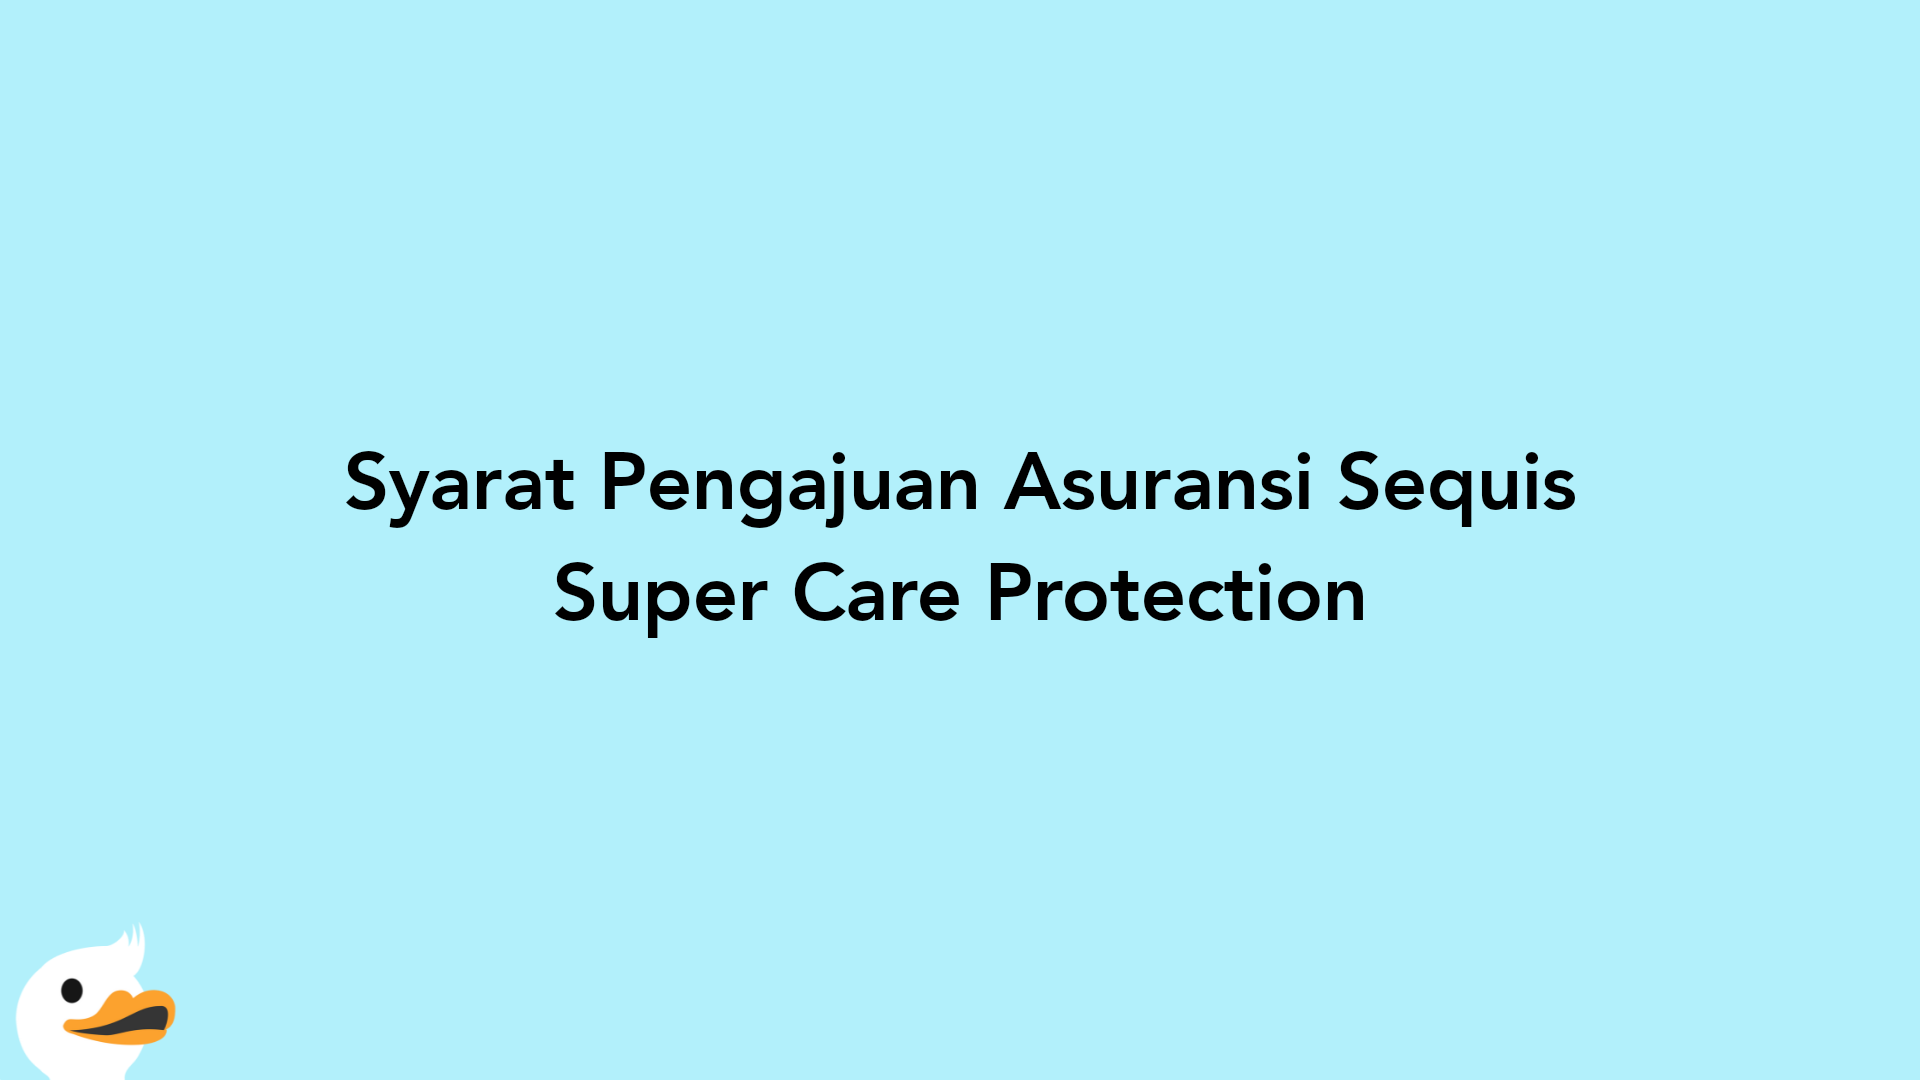 Syarat Pengajuan Asuransi Sequis Super Care Protection